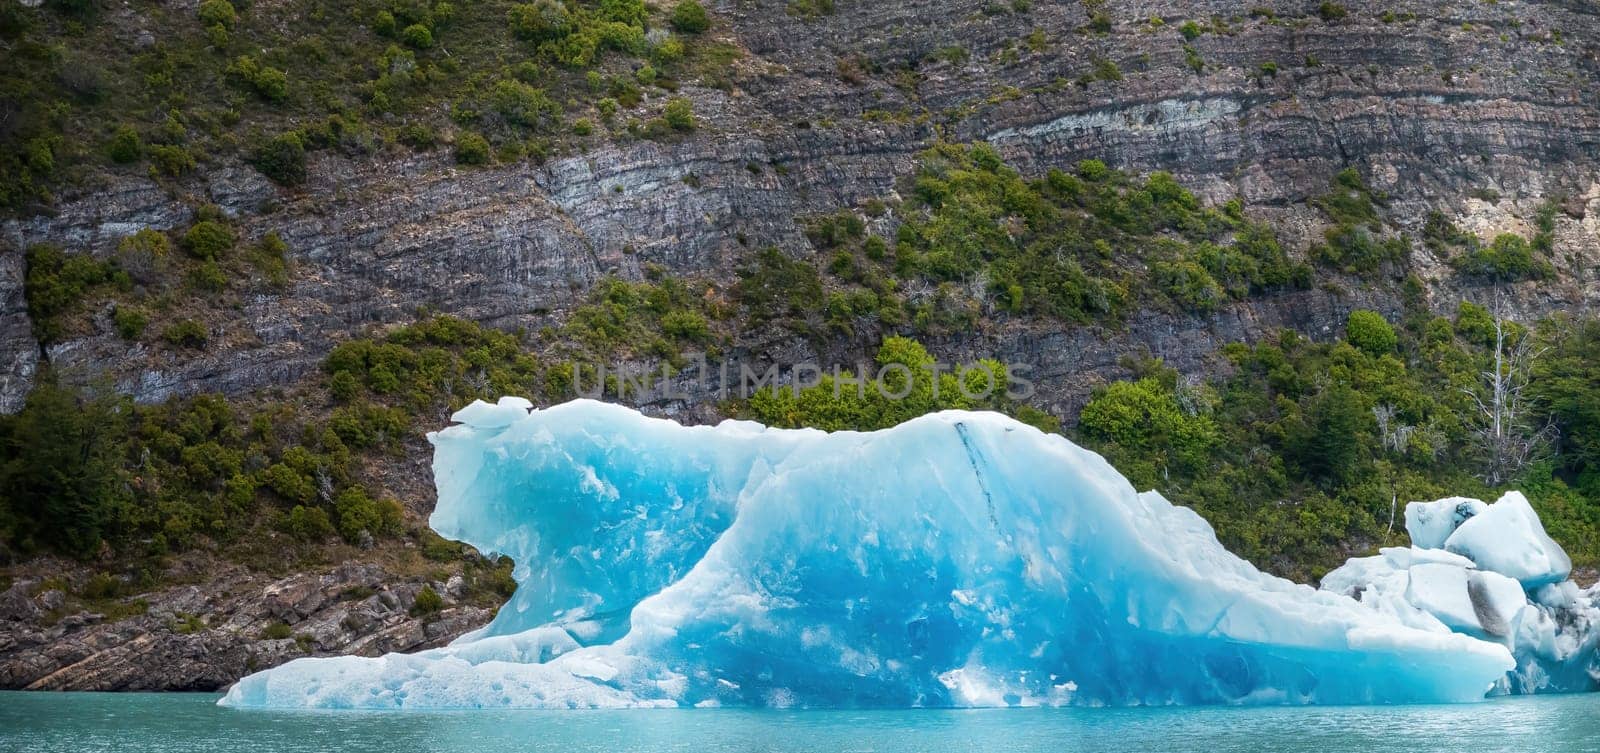 Majestic Blue Iceberg Floating in a Pristine Lake by FerradalFCG